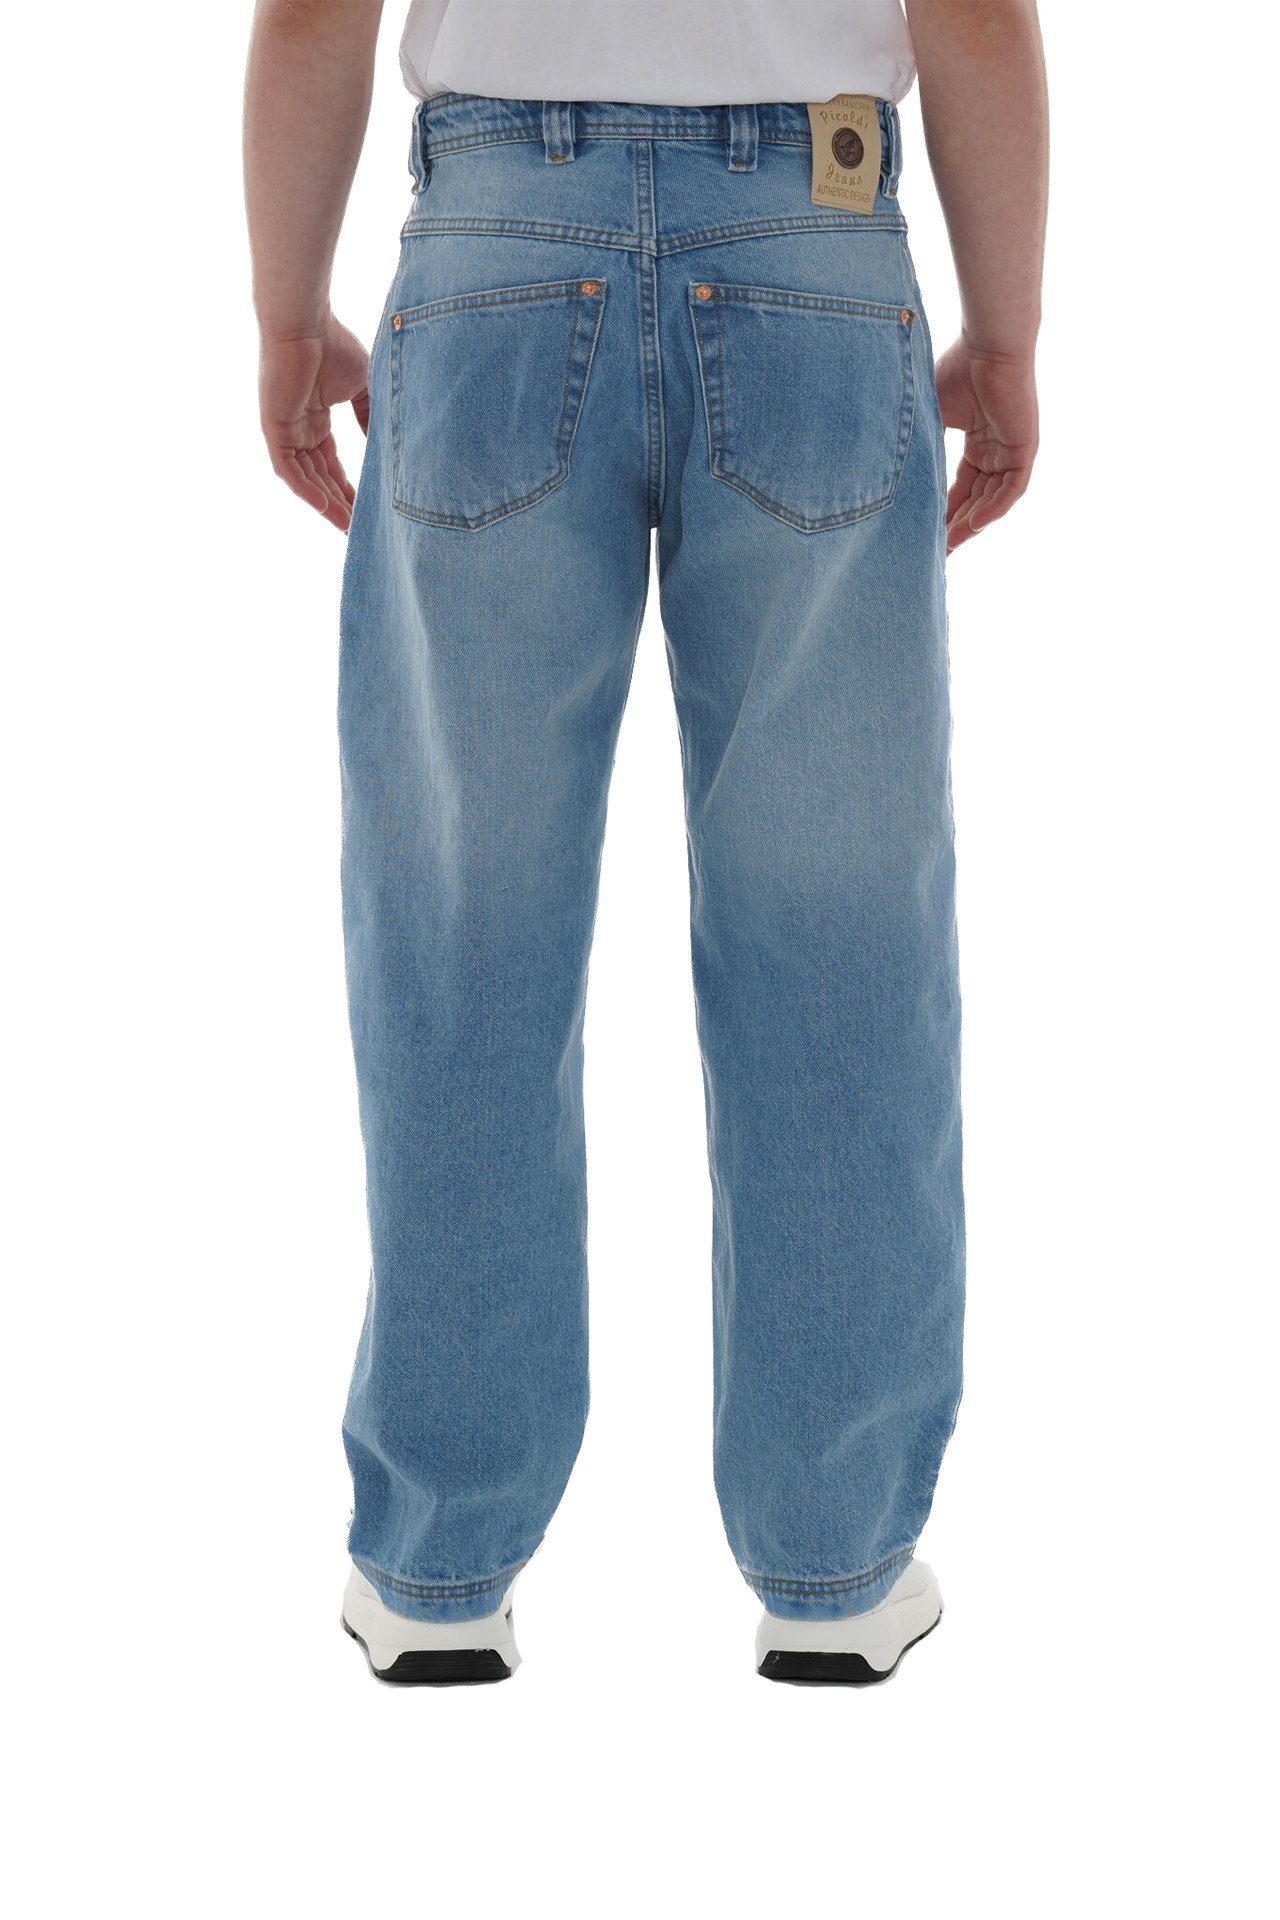 PICALDI Fit, Pocket Weite Raze Loose 471 Five Zicco Jeans Jeans Jeans